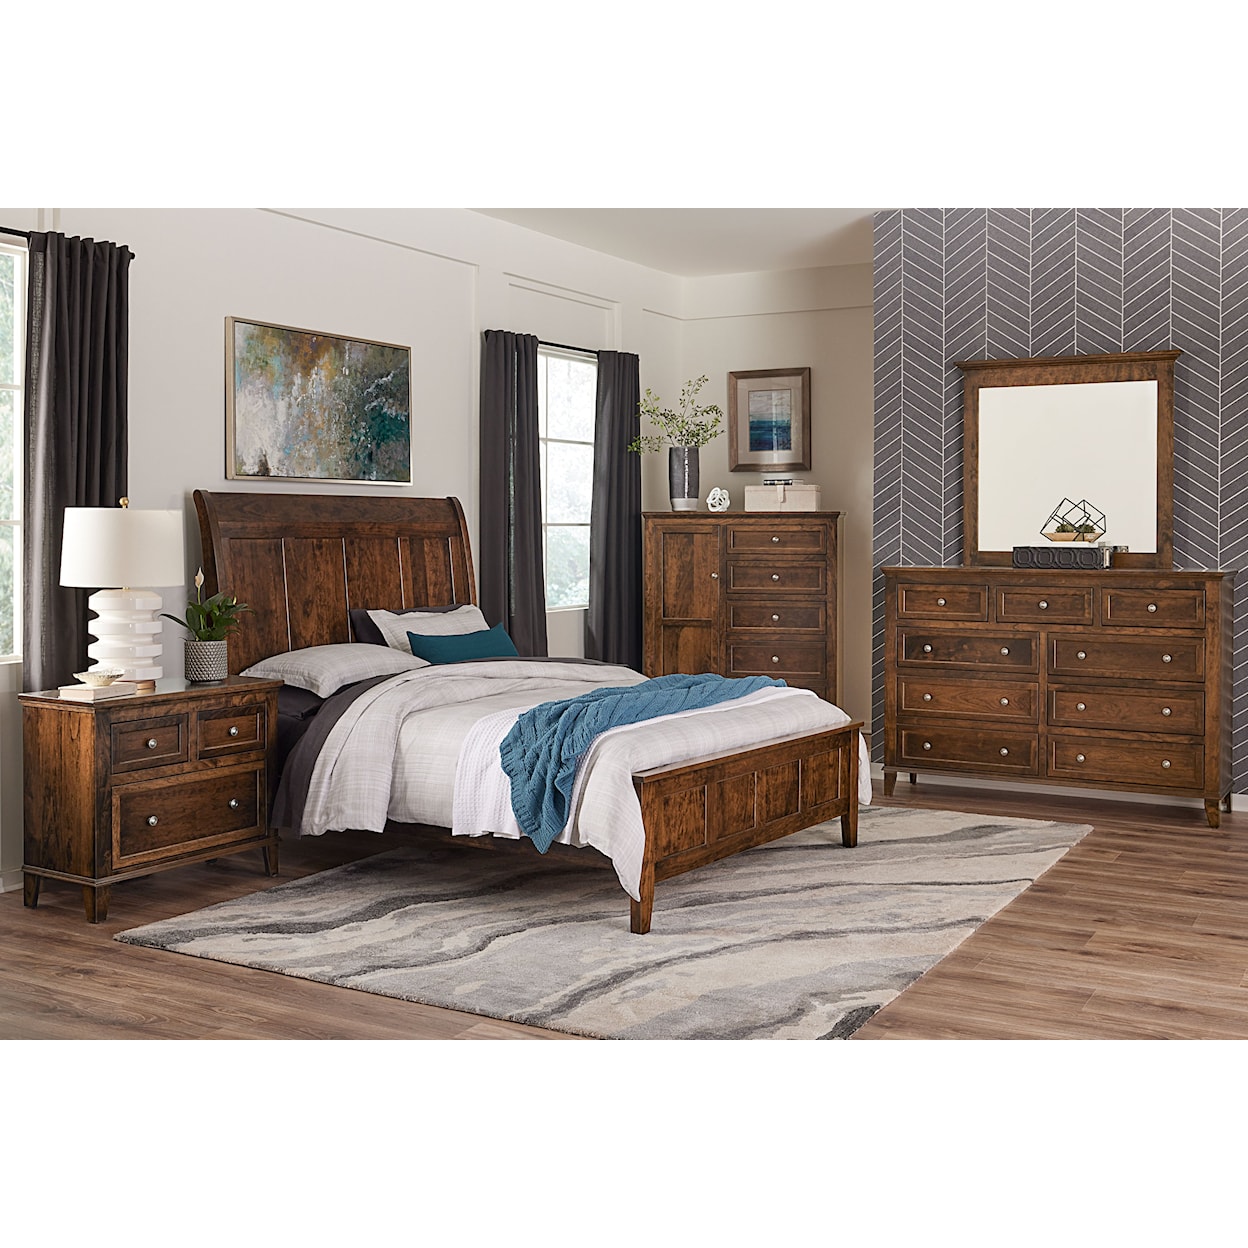 Archbold Furniture Belmont King Sleigh Bed